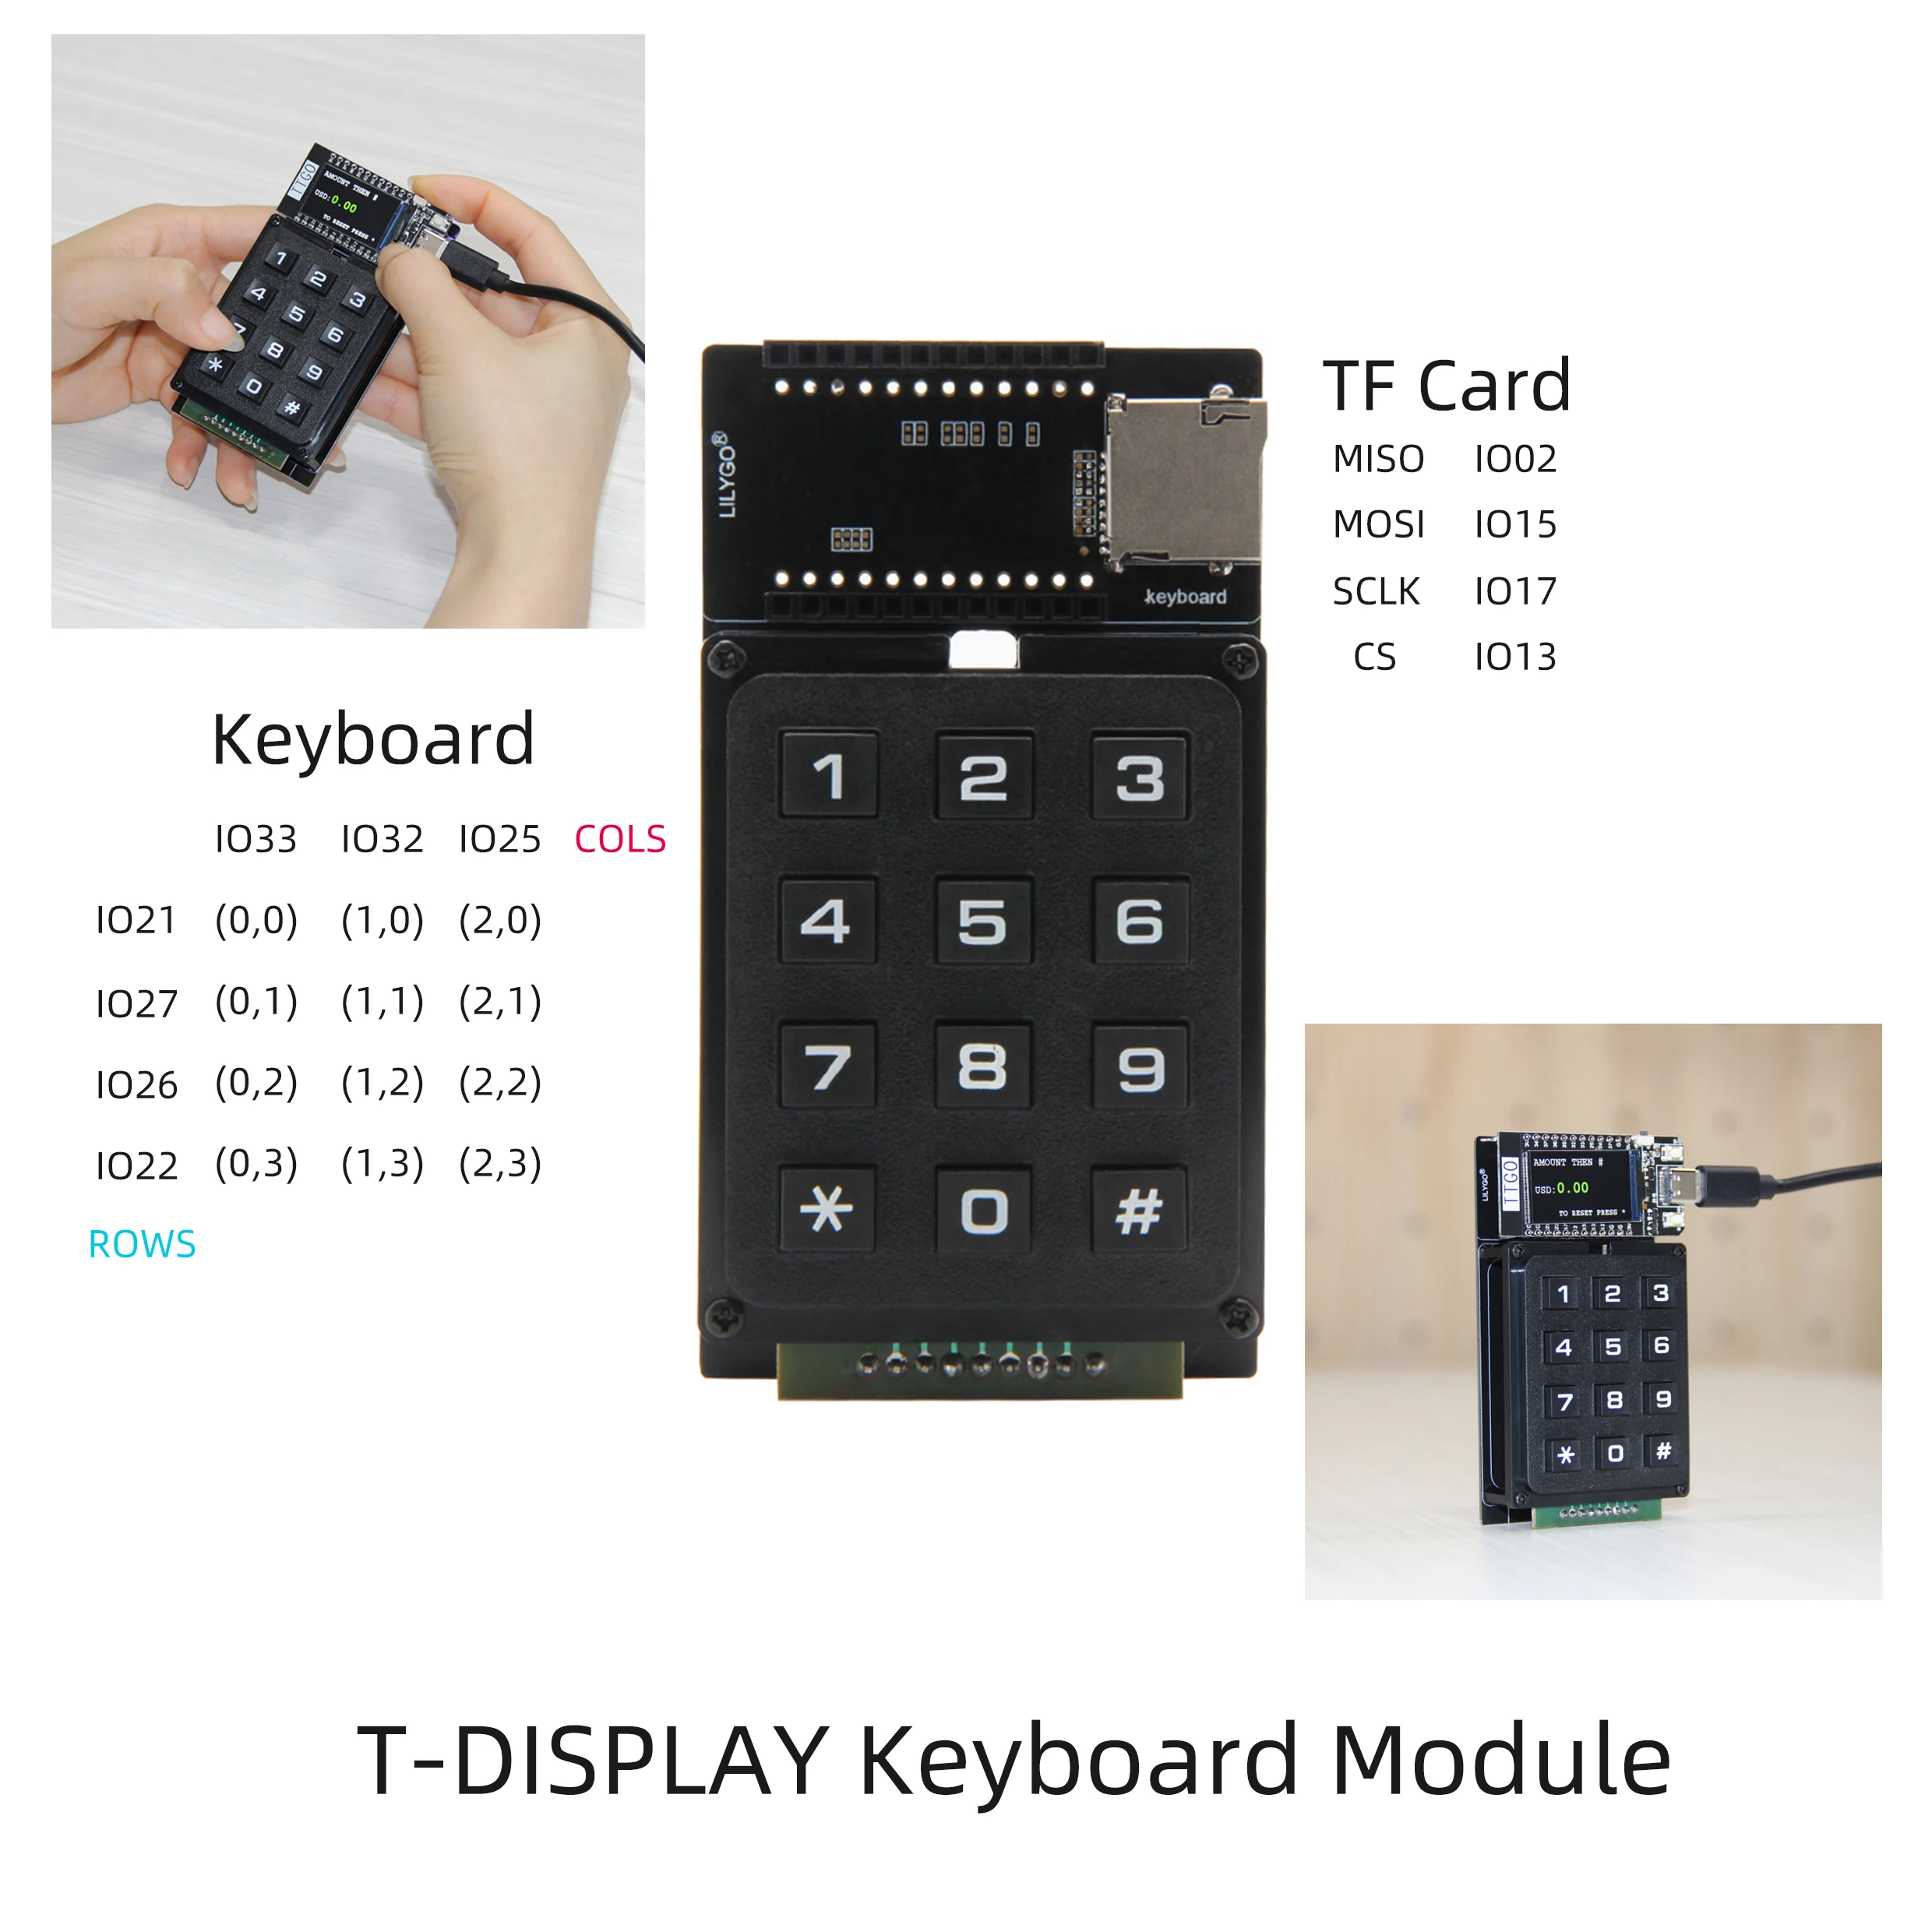 LILYGO® LNURLPoS T-Display Keyboard Kit ESP32 Wireless Module 1.14 Inch LCD Display Controller Development Board WiFi Bluetooth images - 6